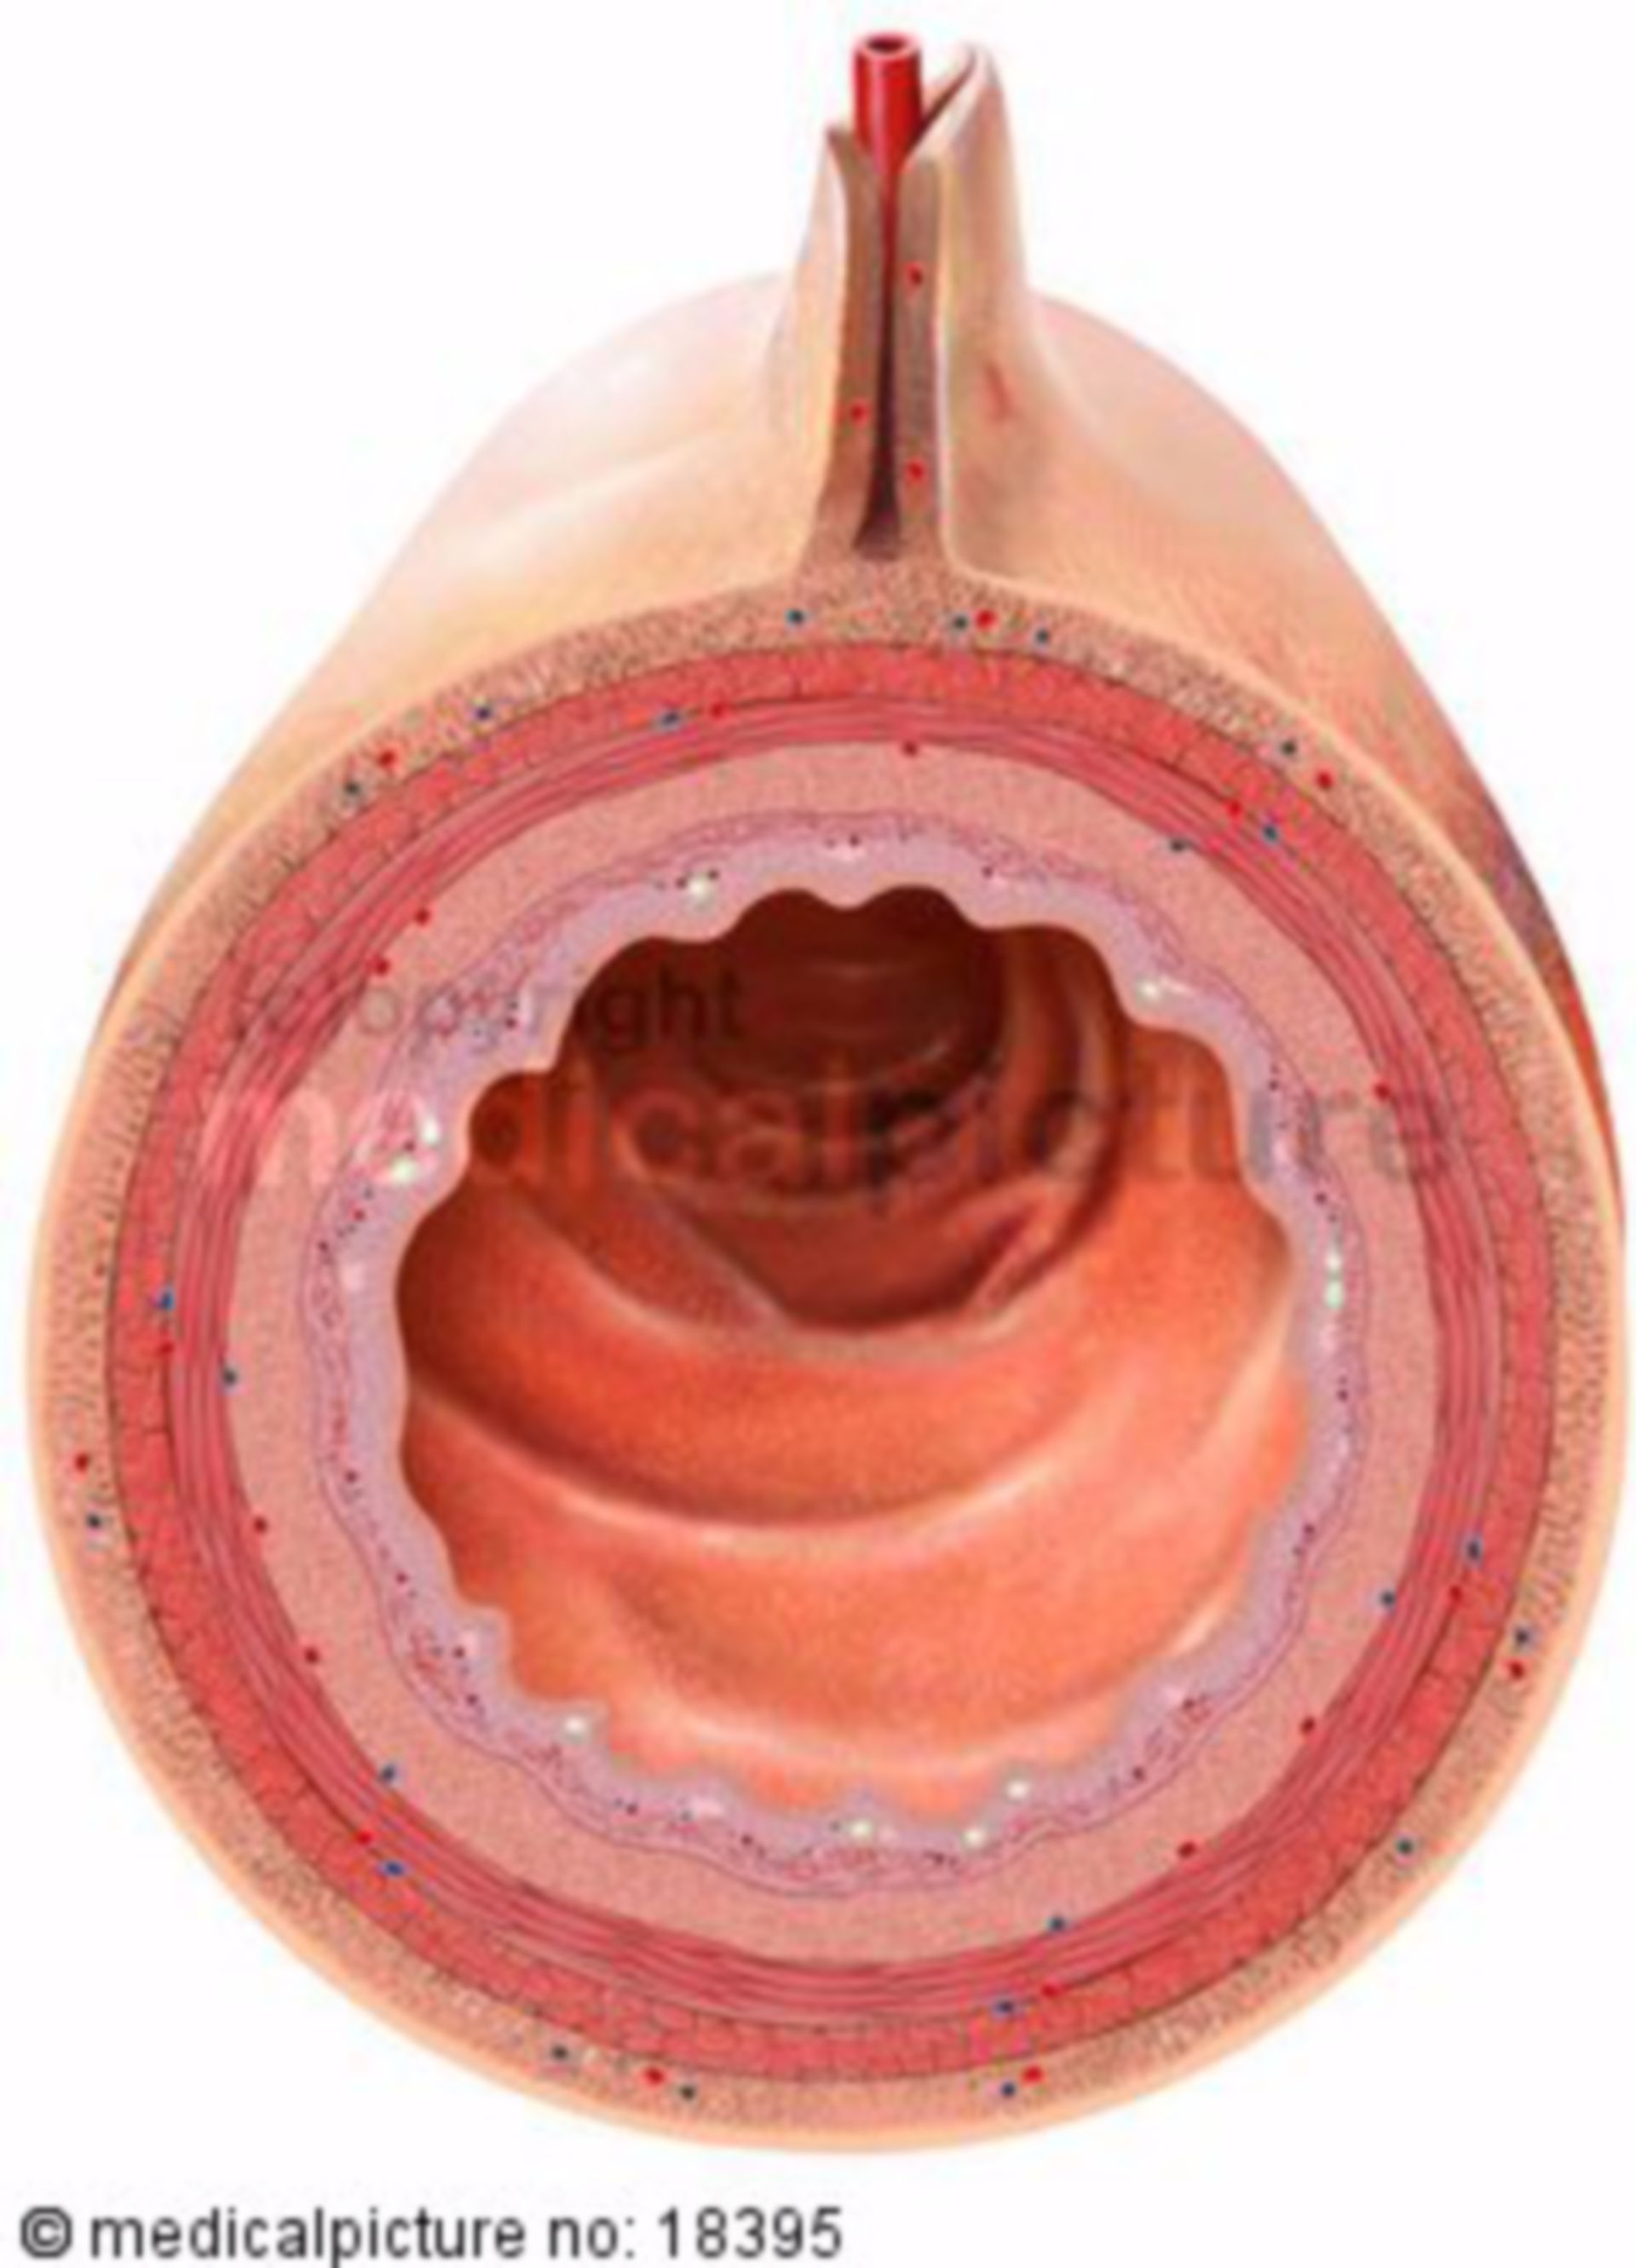 lumen of small intestine